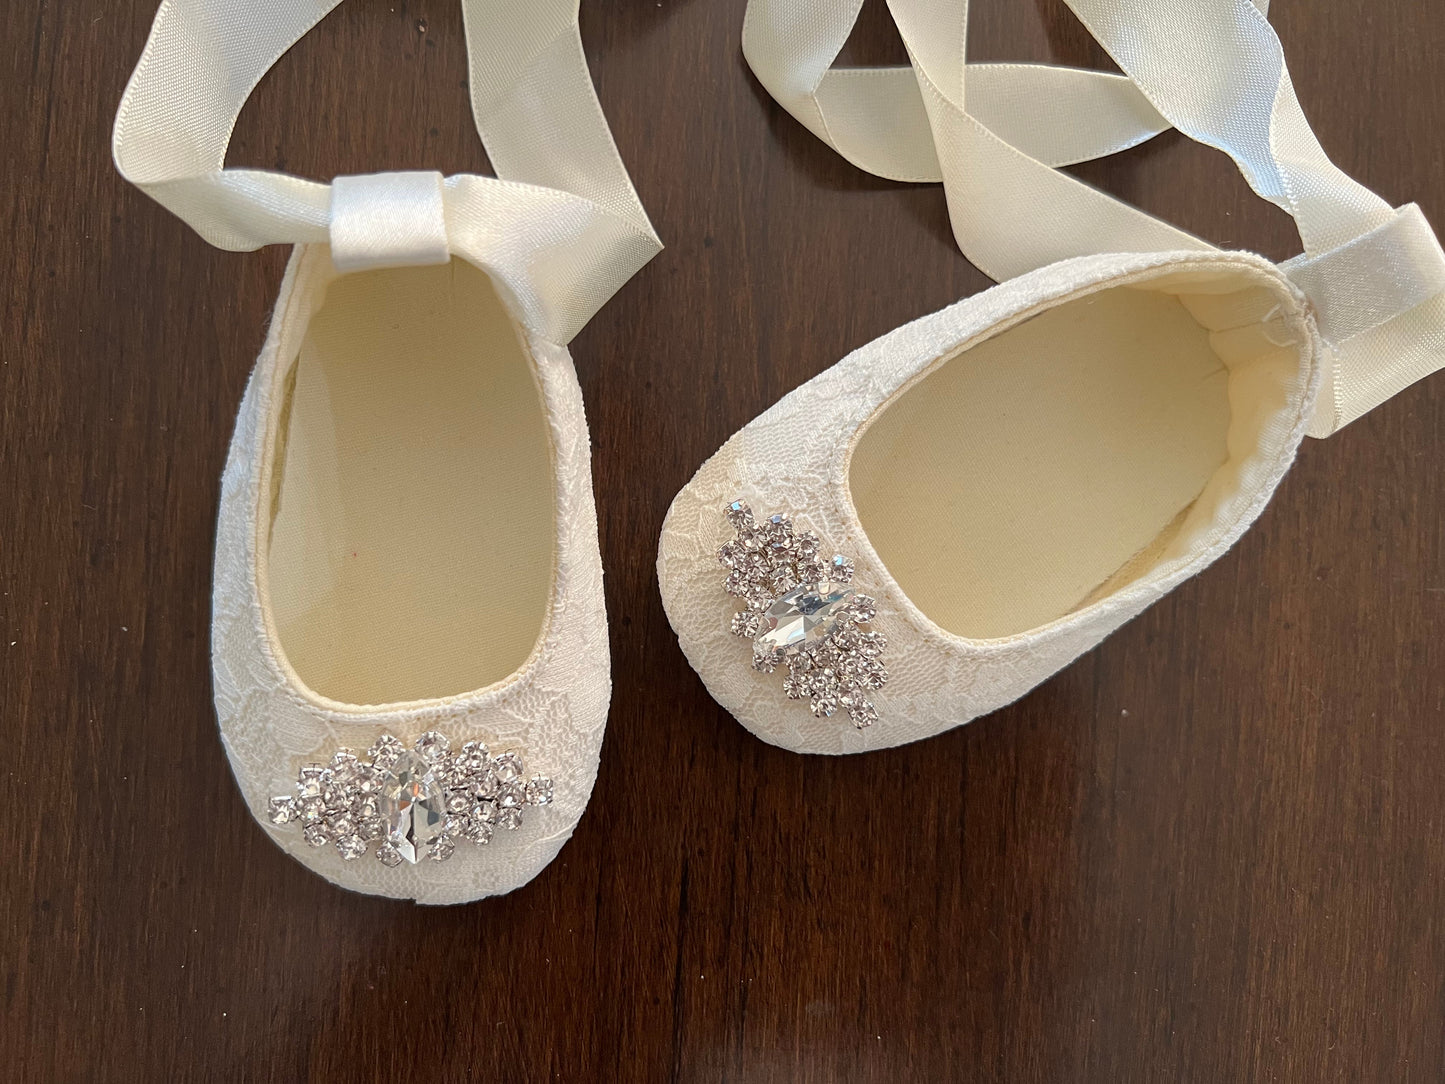 Baby Girl Ivory Baptism Shoes with Rhinestones